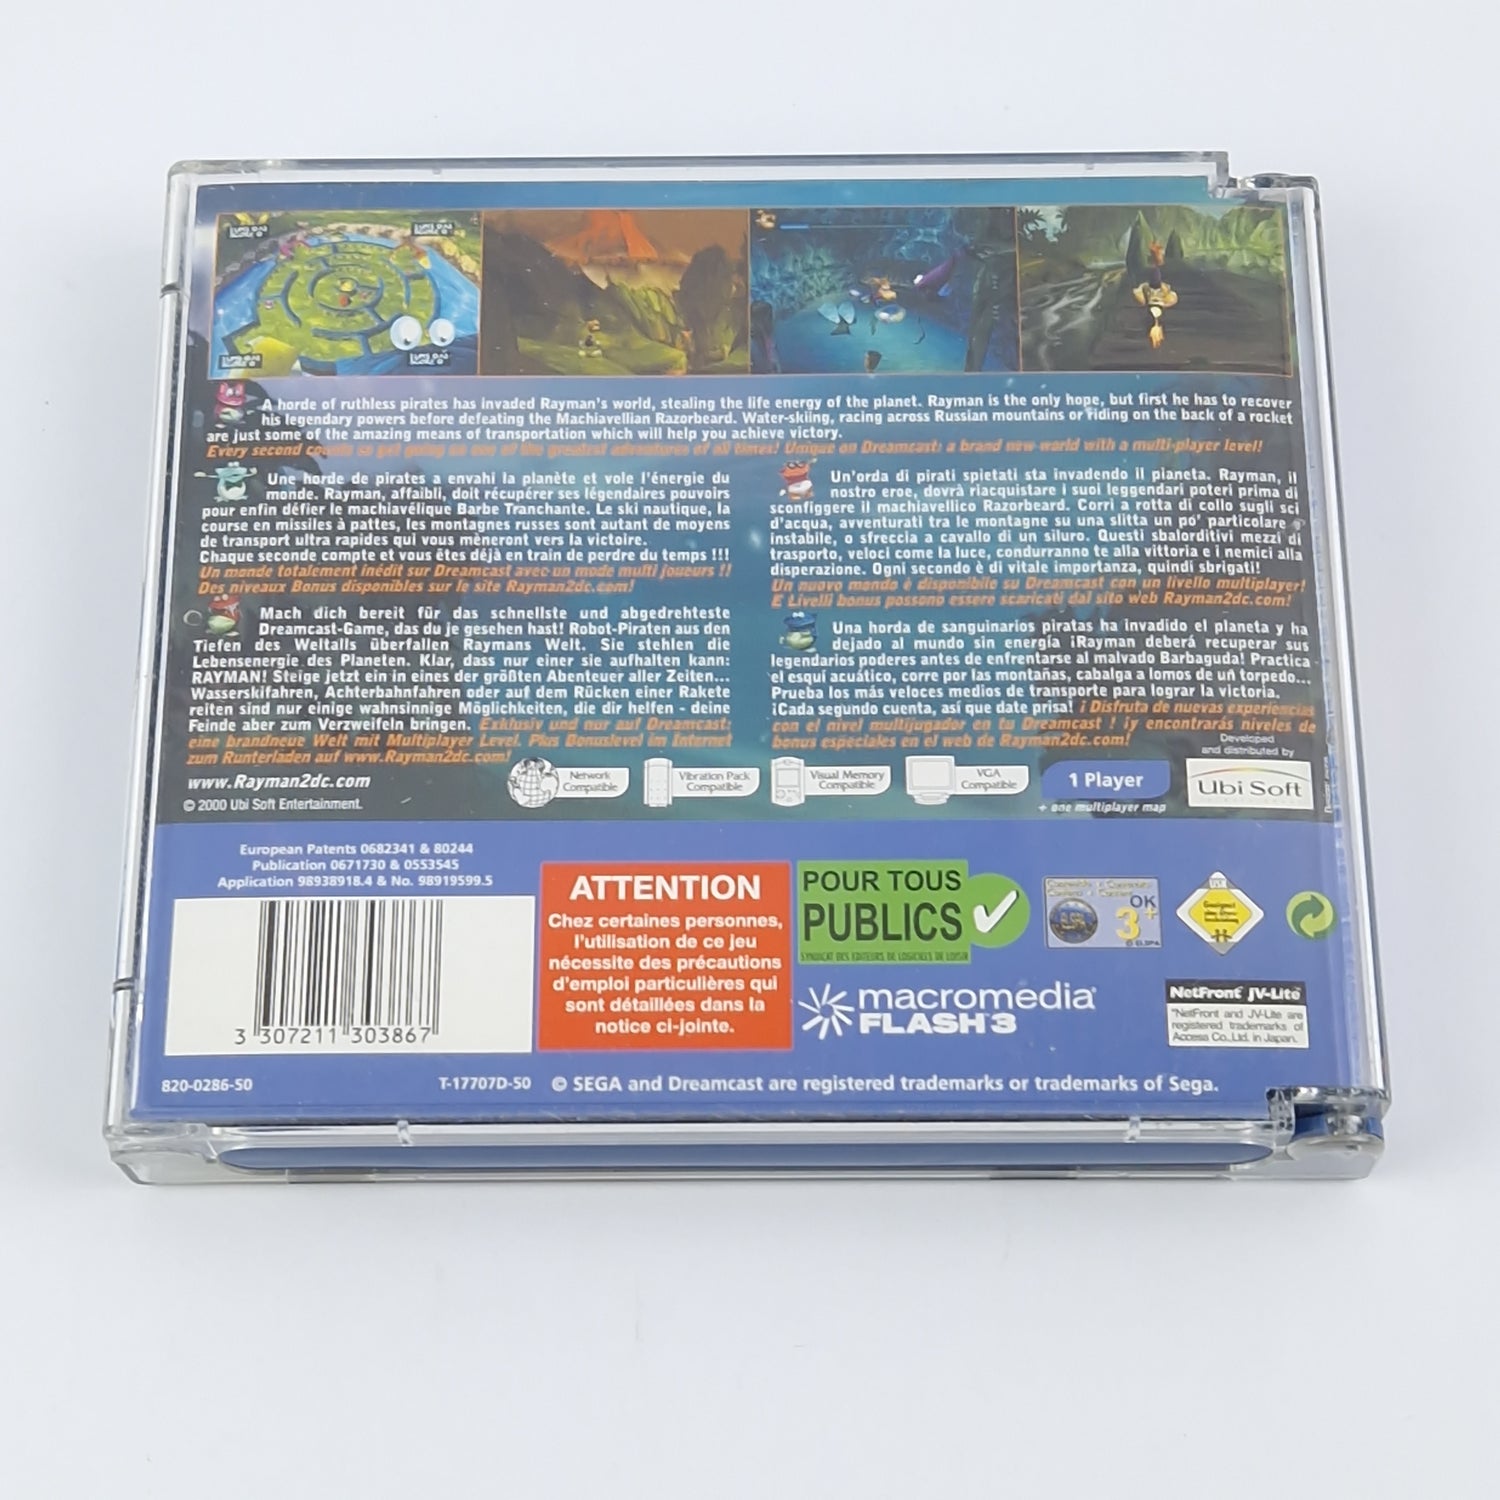 Sega Dreamcast Spiel : Rayman 2 The Great Escape - OVP Anleitung CD PAL DC Game